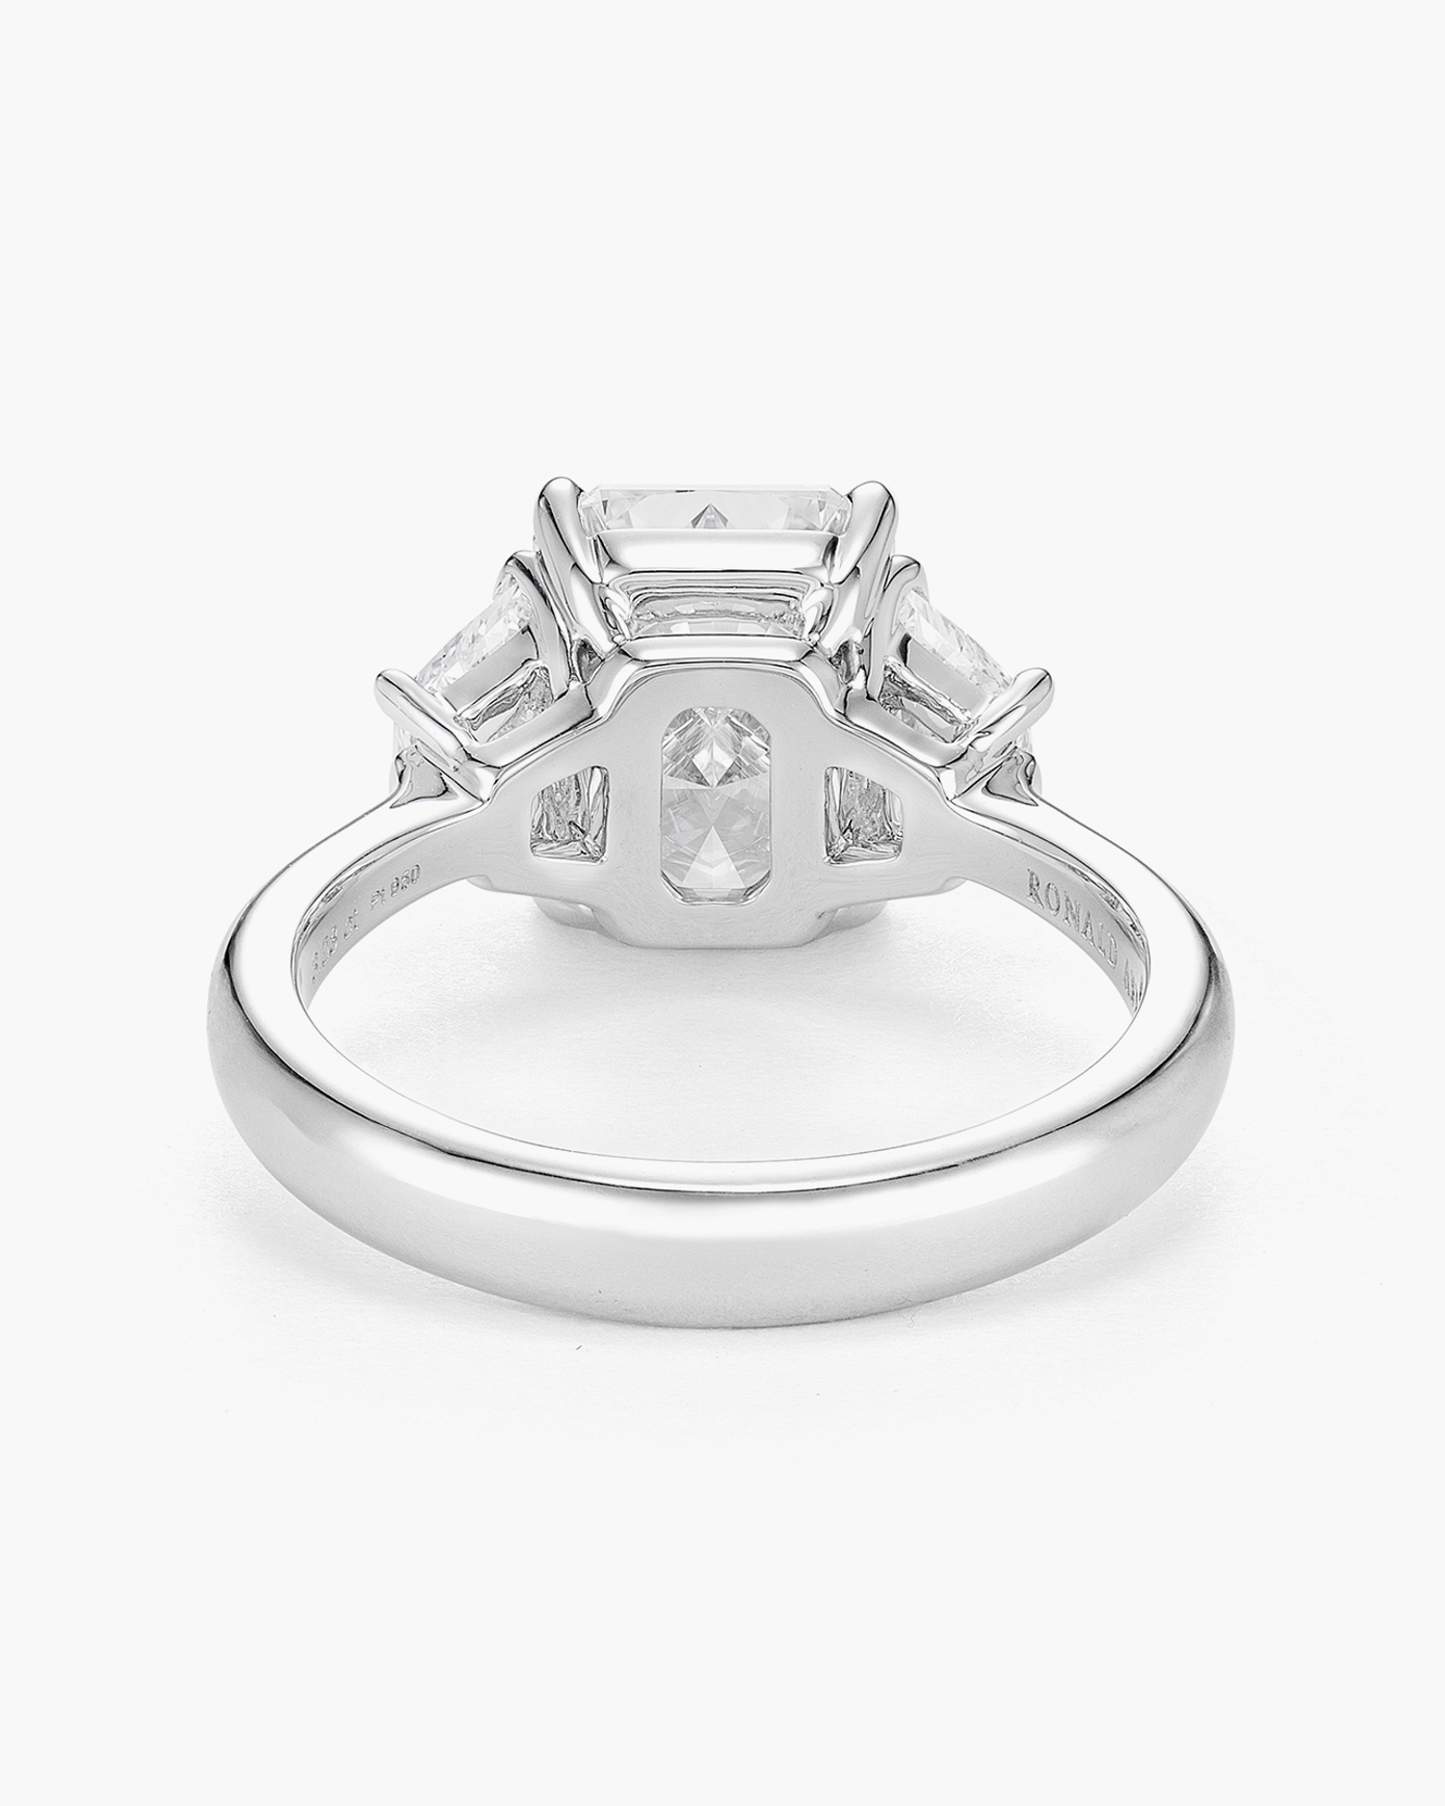 3.03 carat Radiant Cut Diamond Ring